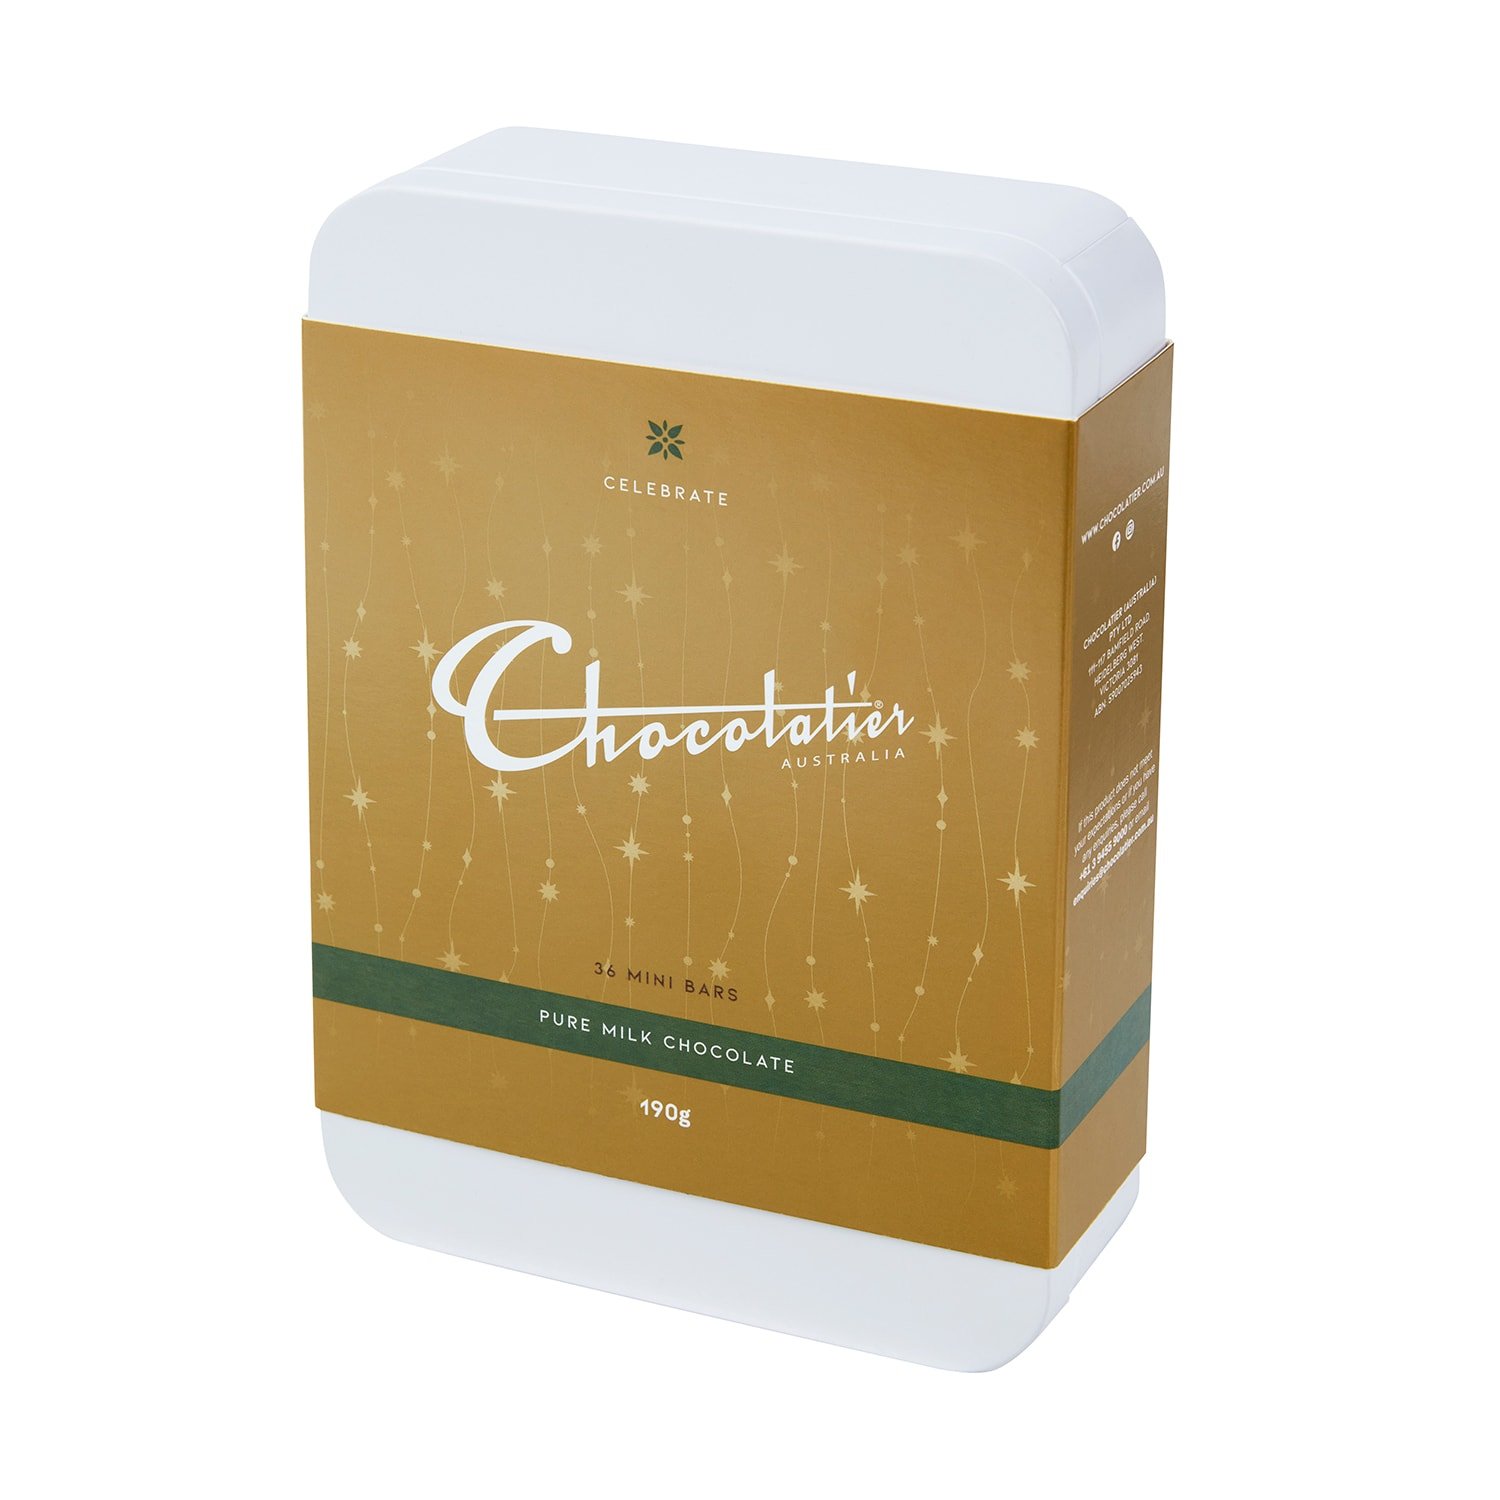 XM0135-Chocolatier-Australia-Christmas-Celebrate-Milk-Chocolate-Tin-190g-1500-RGB-A.jpg